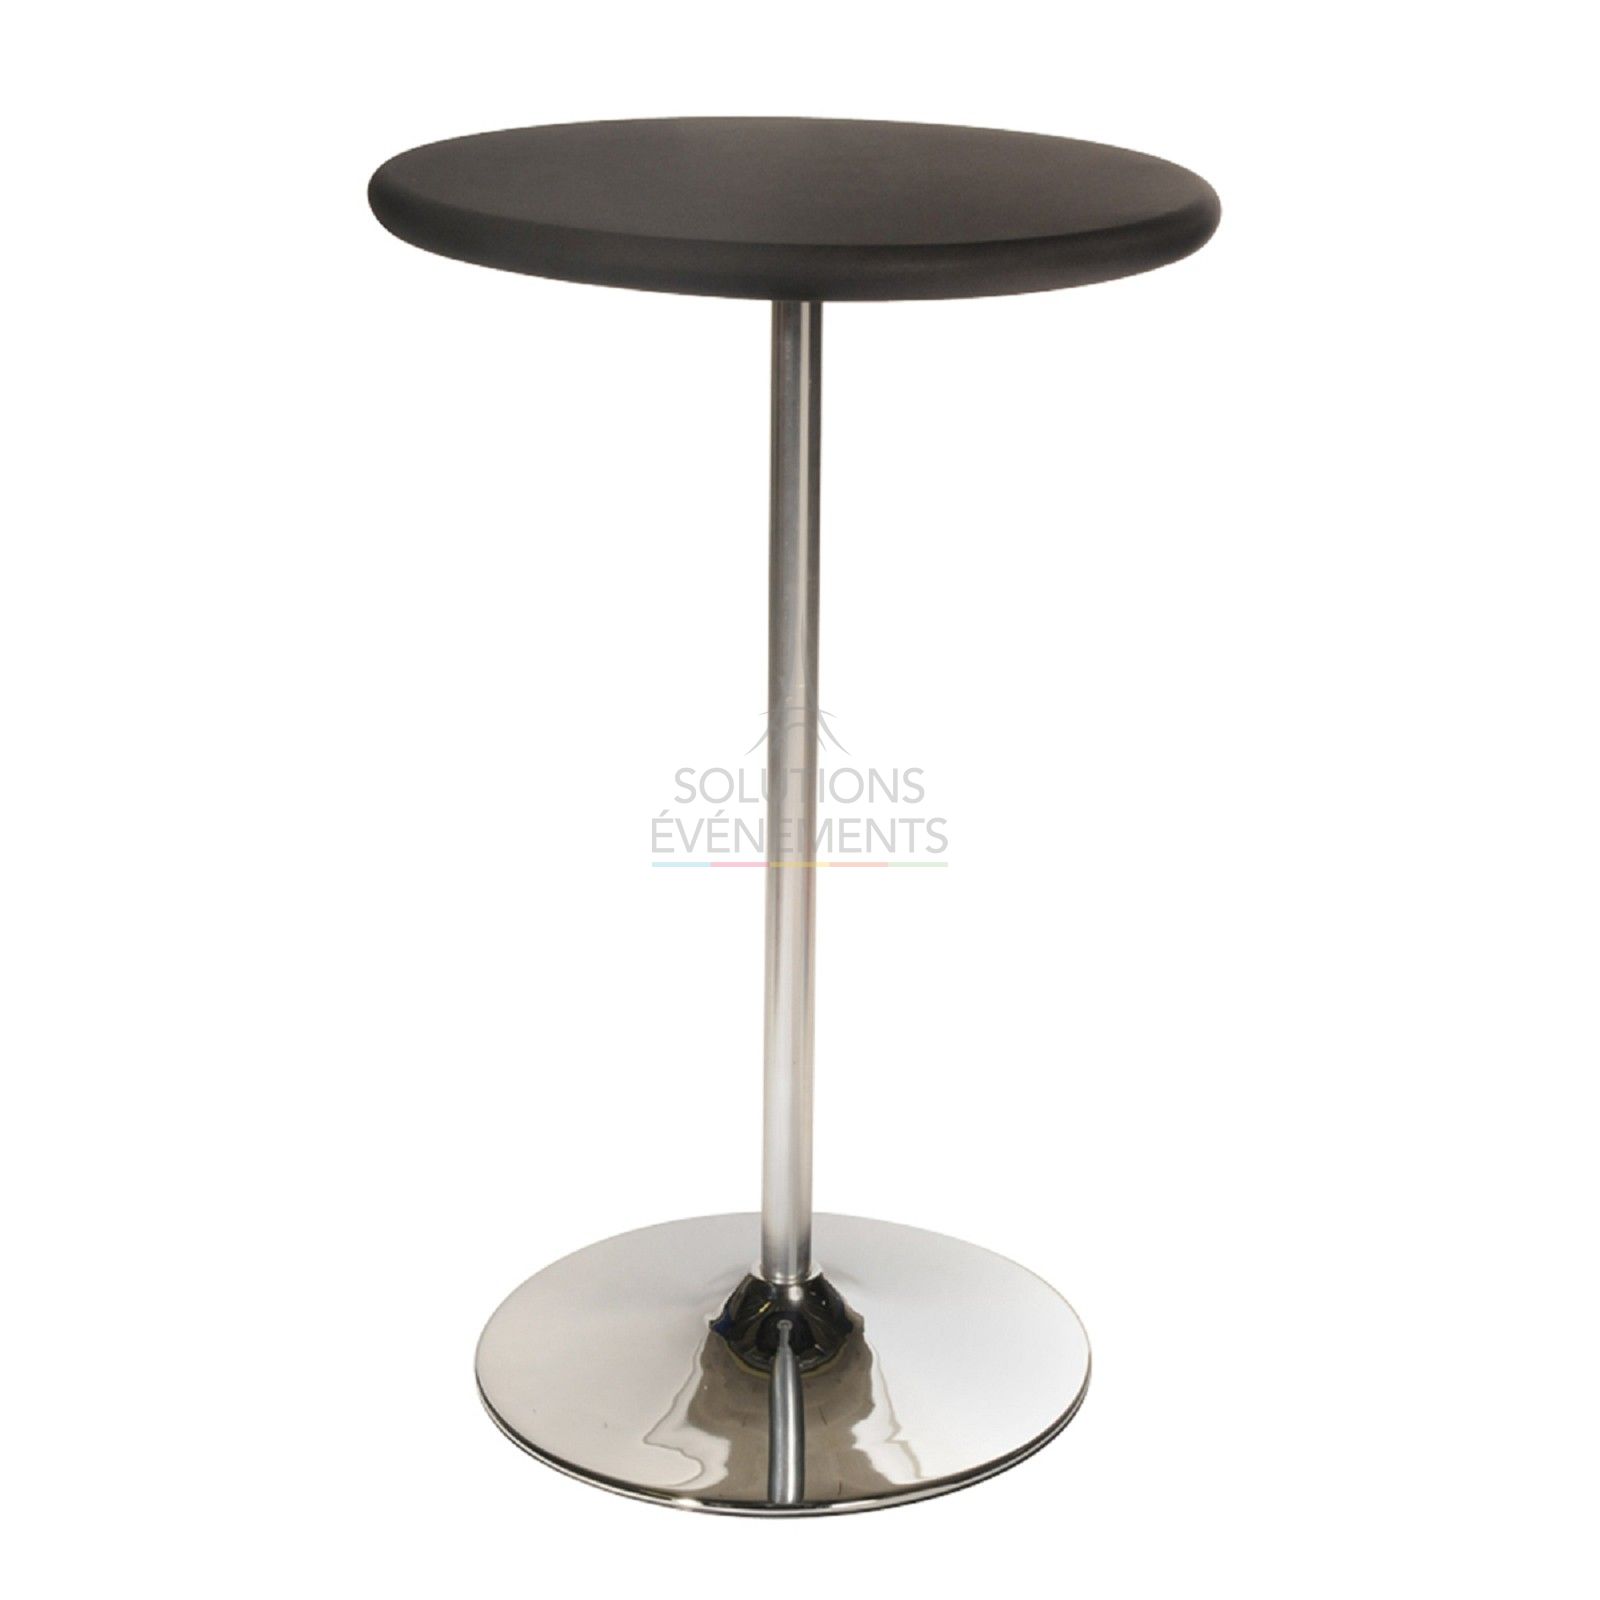 Rental of high standing dining table diameter 70cm